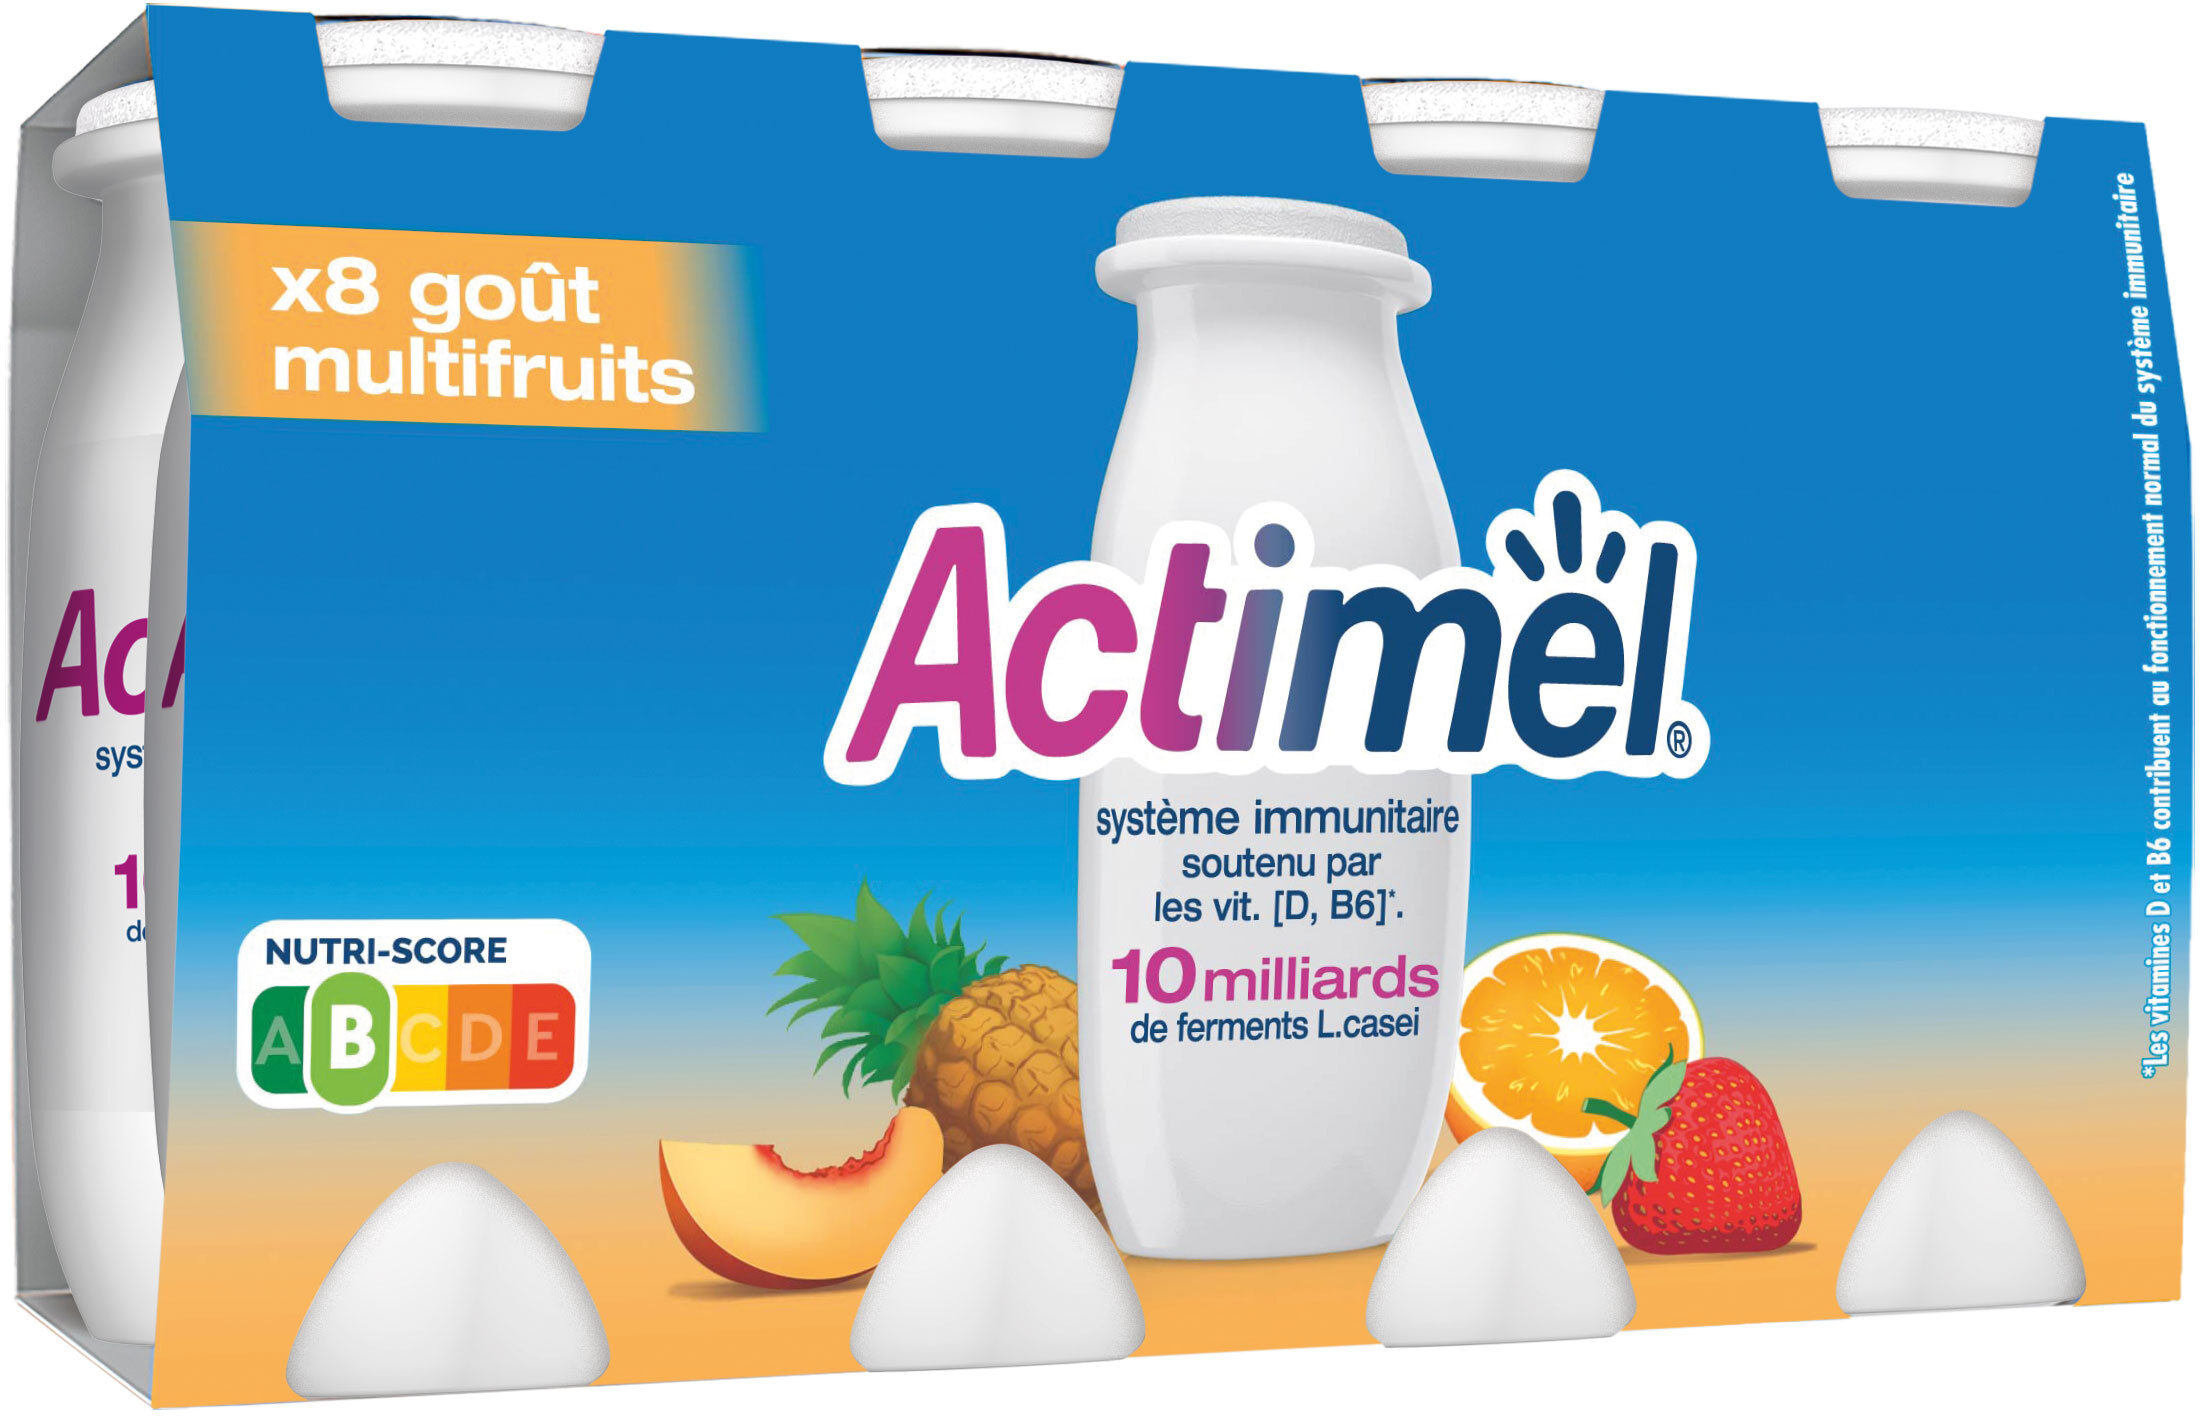 Actimel gout multifruit 100 g x 8 - Product - fr